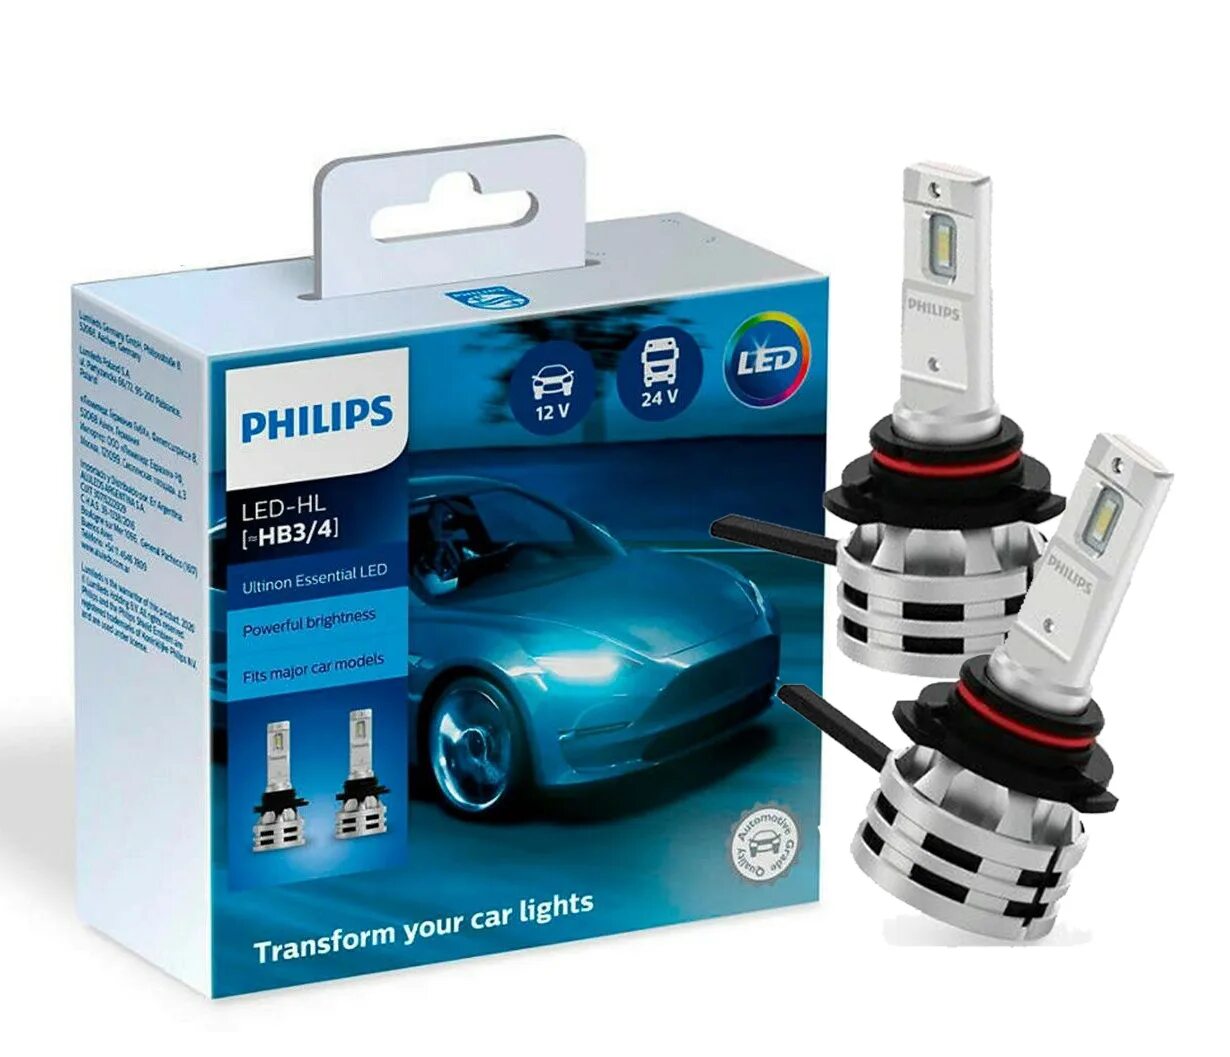 Светодиодные hb3 купить. Philips Ultinon Essential led, hb3. Лампы Sylvania hb3 led. Philips Ultinon Essential led, hb3 /hb4, 6500k Honda. Hb4 Philips led.